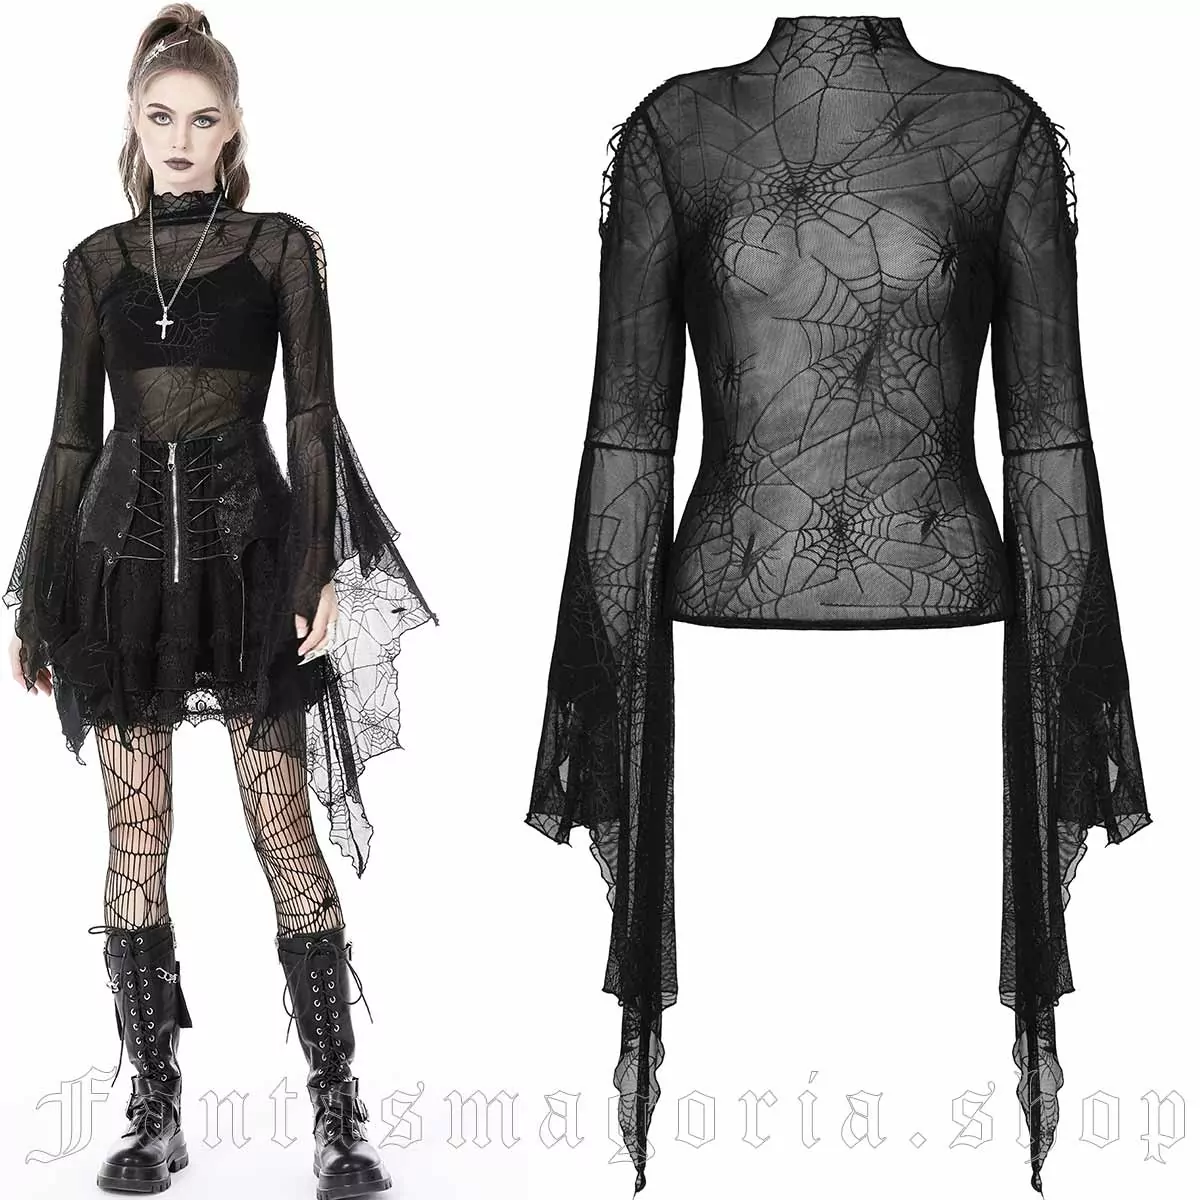 Women's Gothic black spiderweb mesh long flared sleeve top. - Dark in Love - TW453